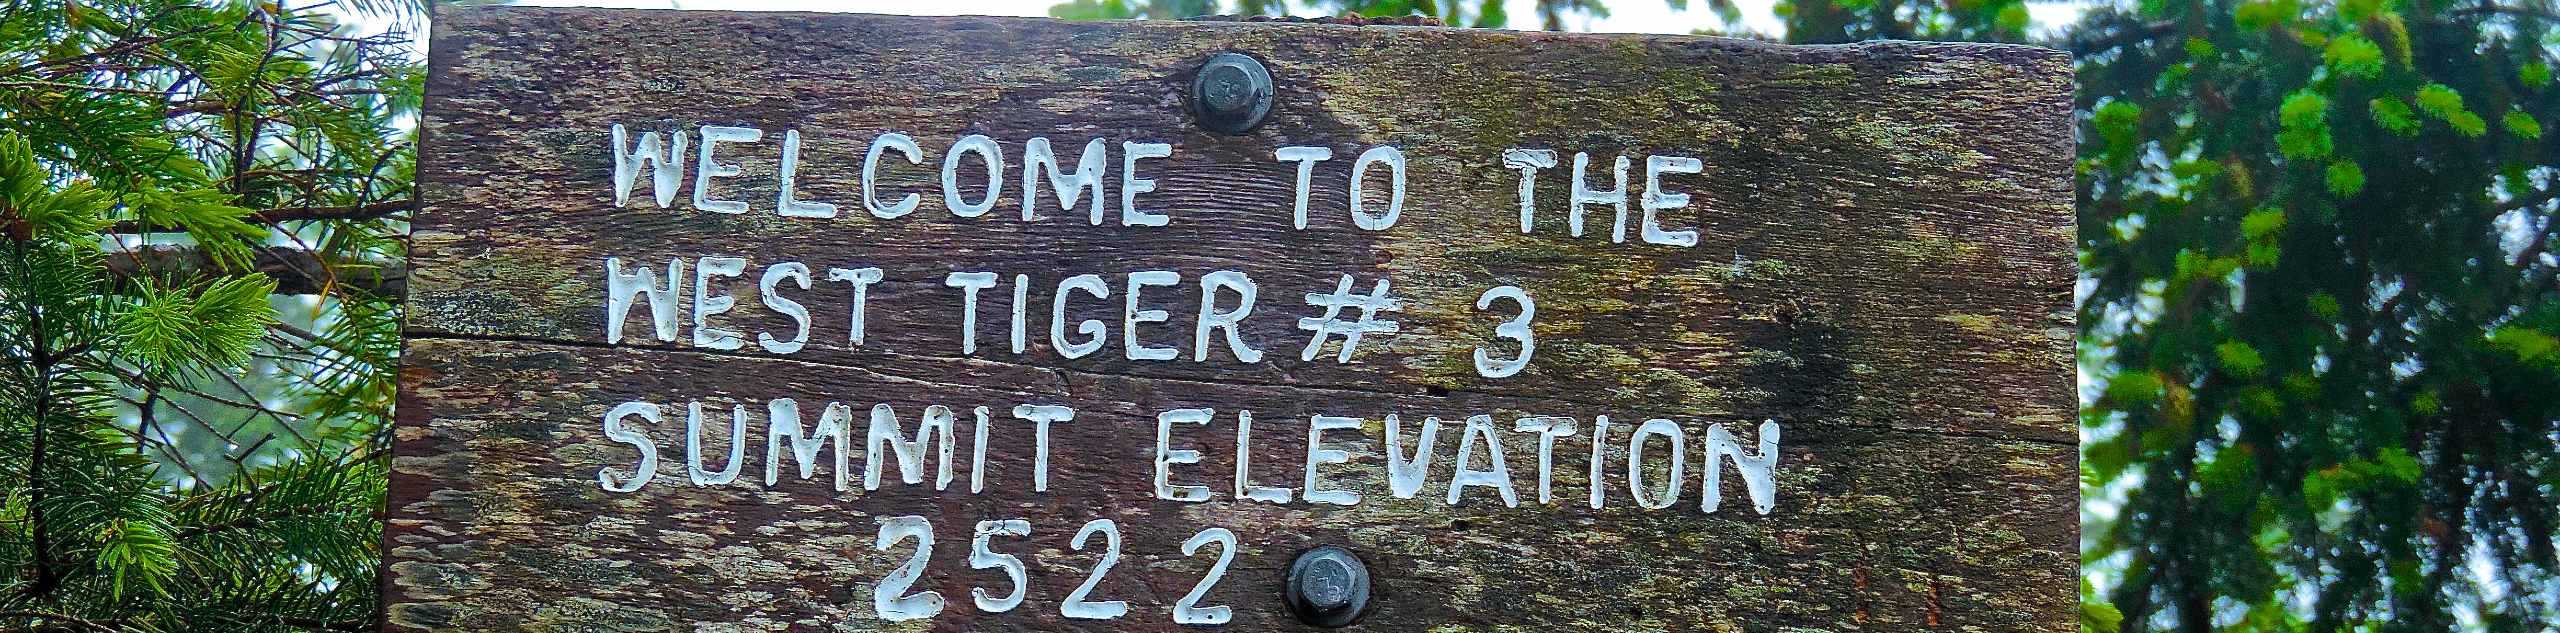 West Tiger #3 Trail